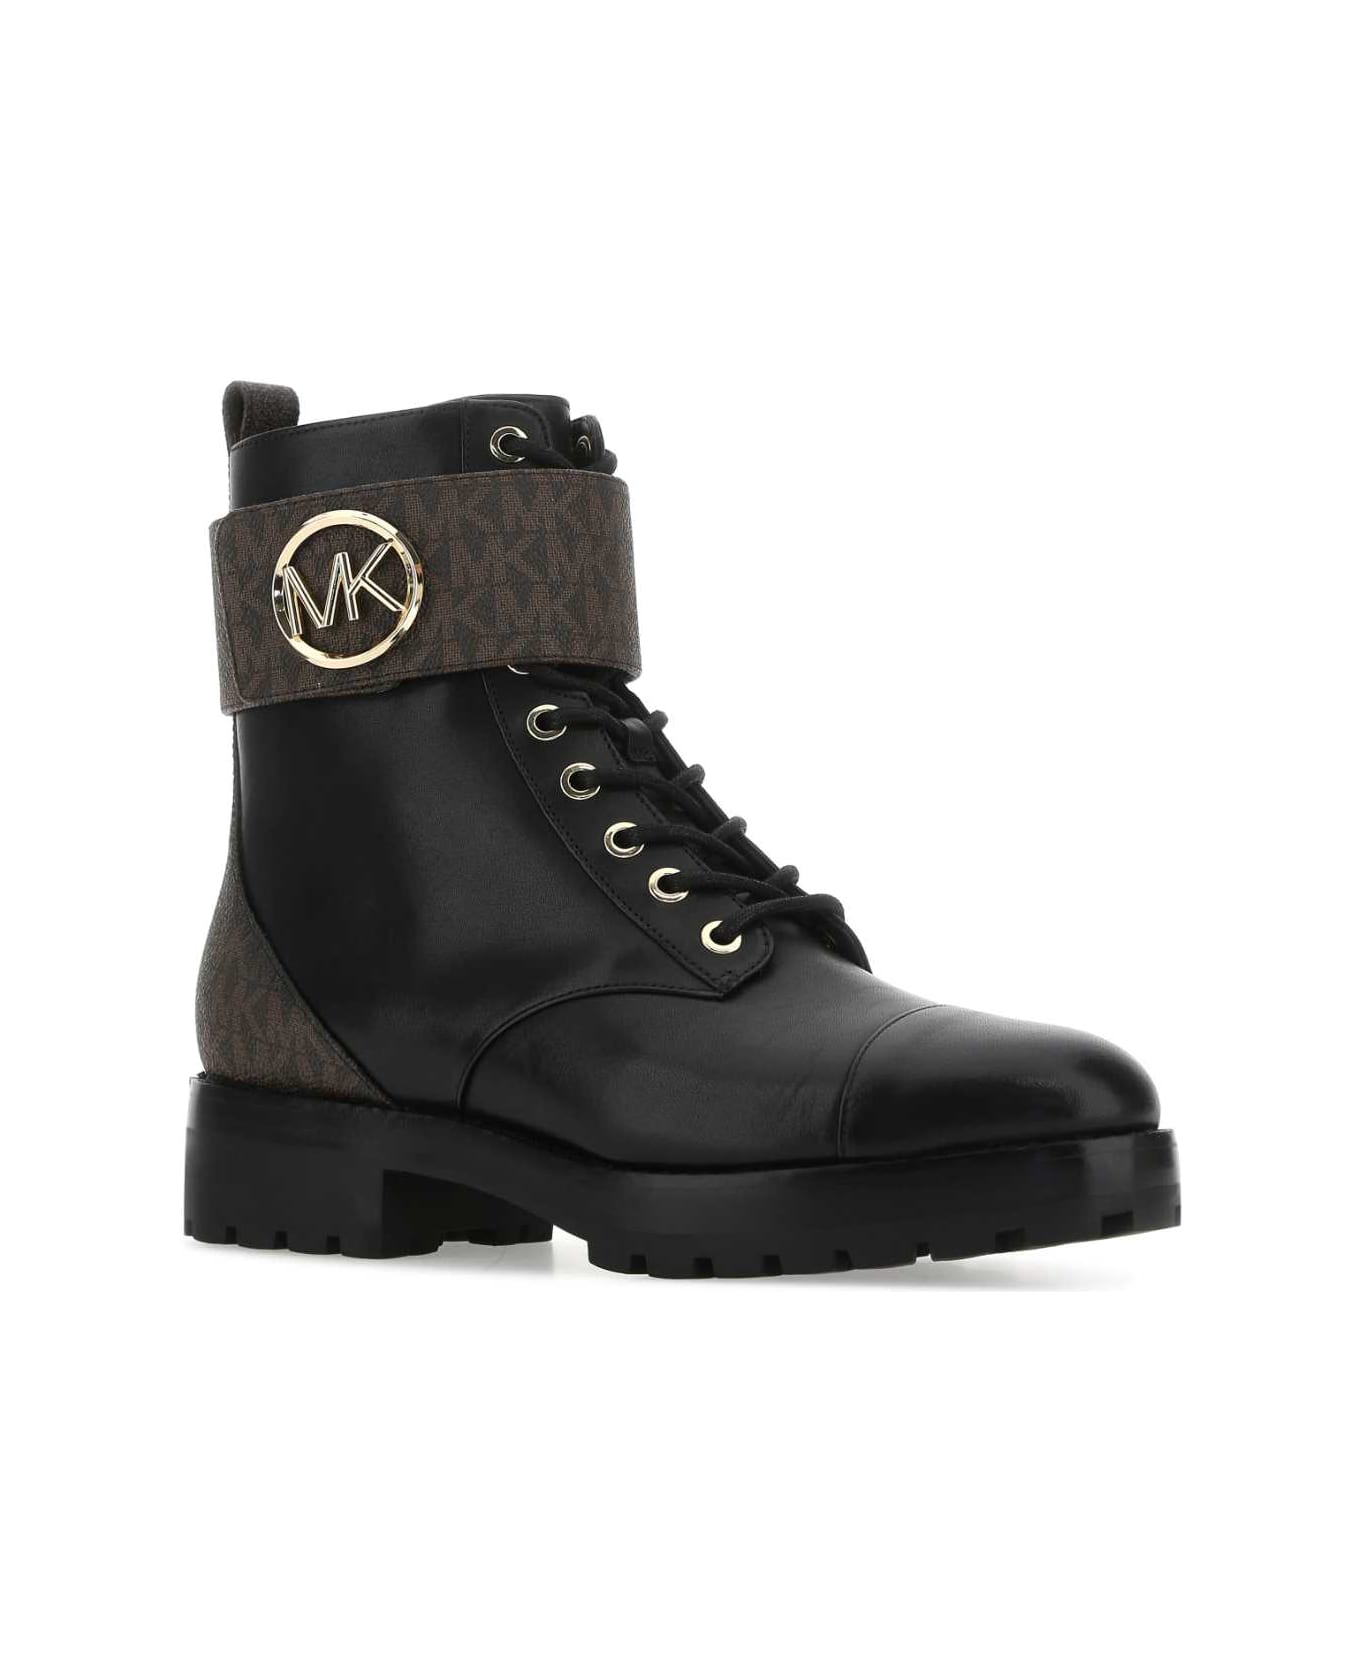 Michael Kors Black Leather Tatum Ankle Boots - BROWNBLK